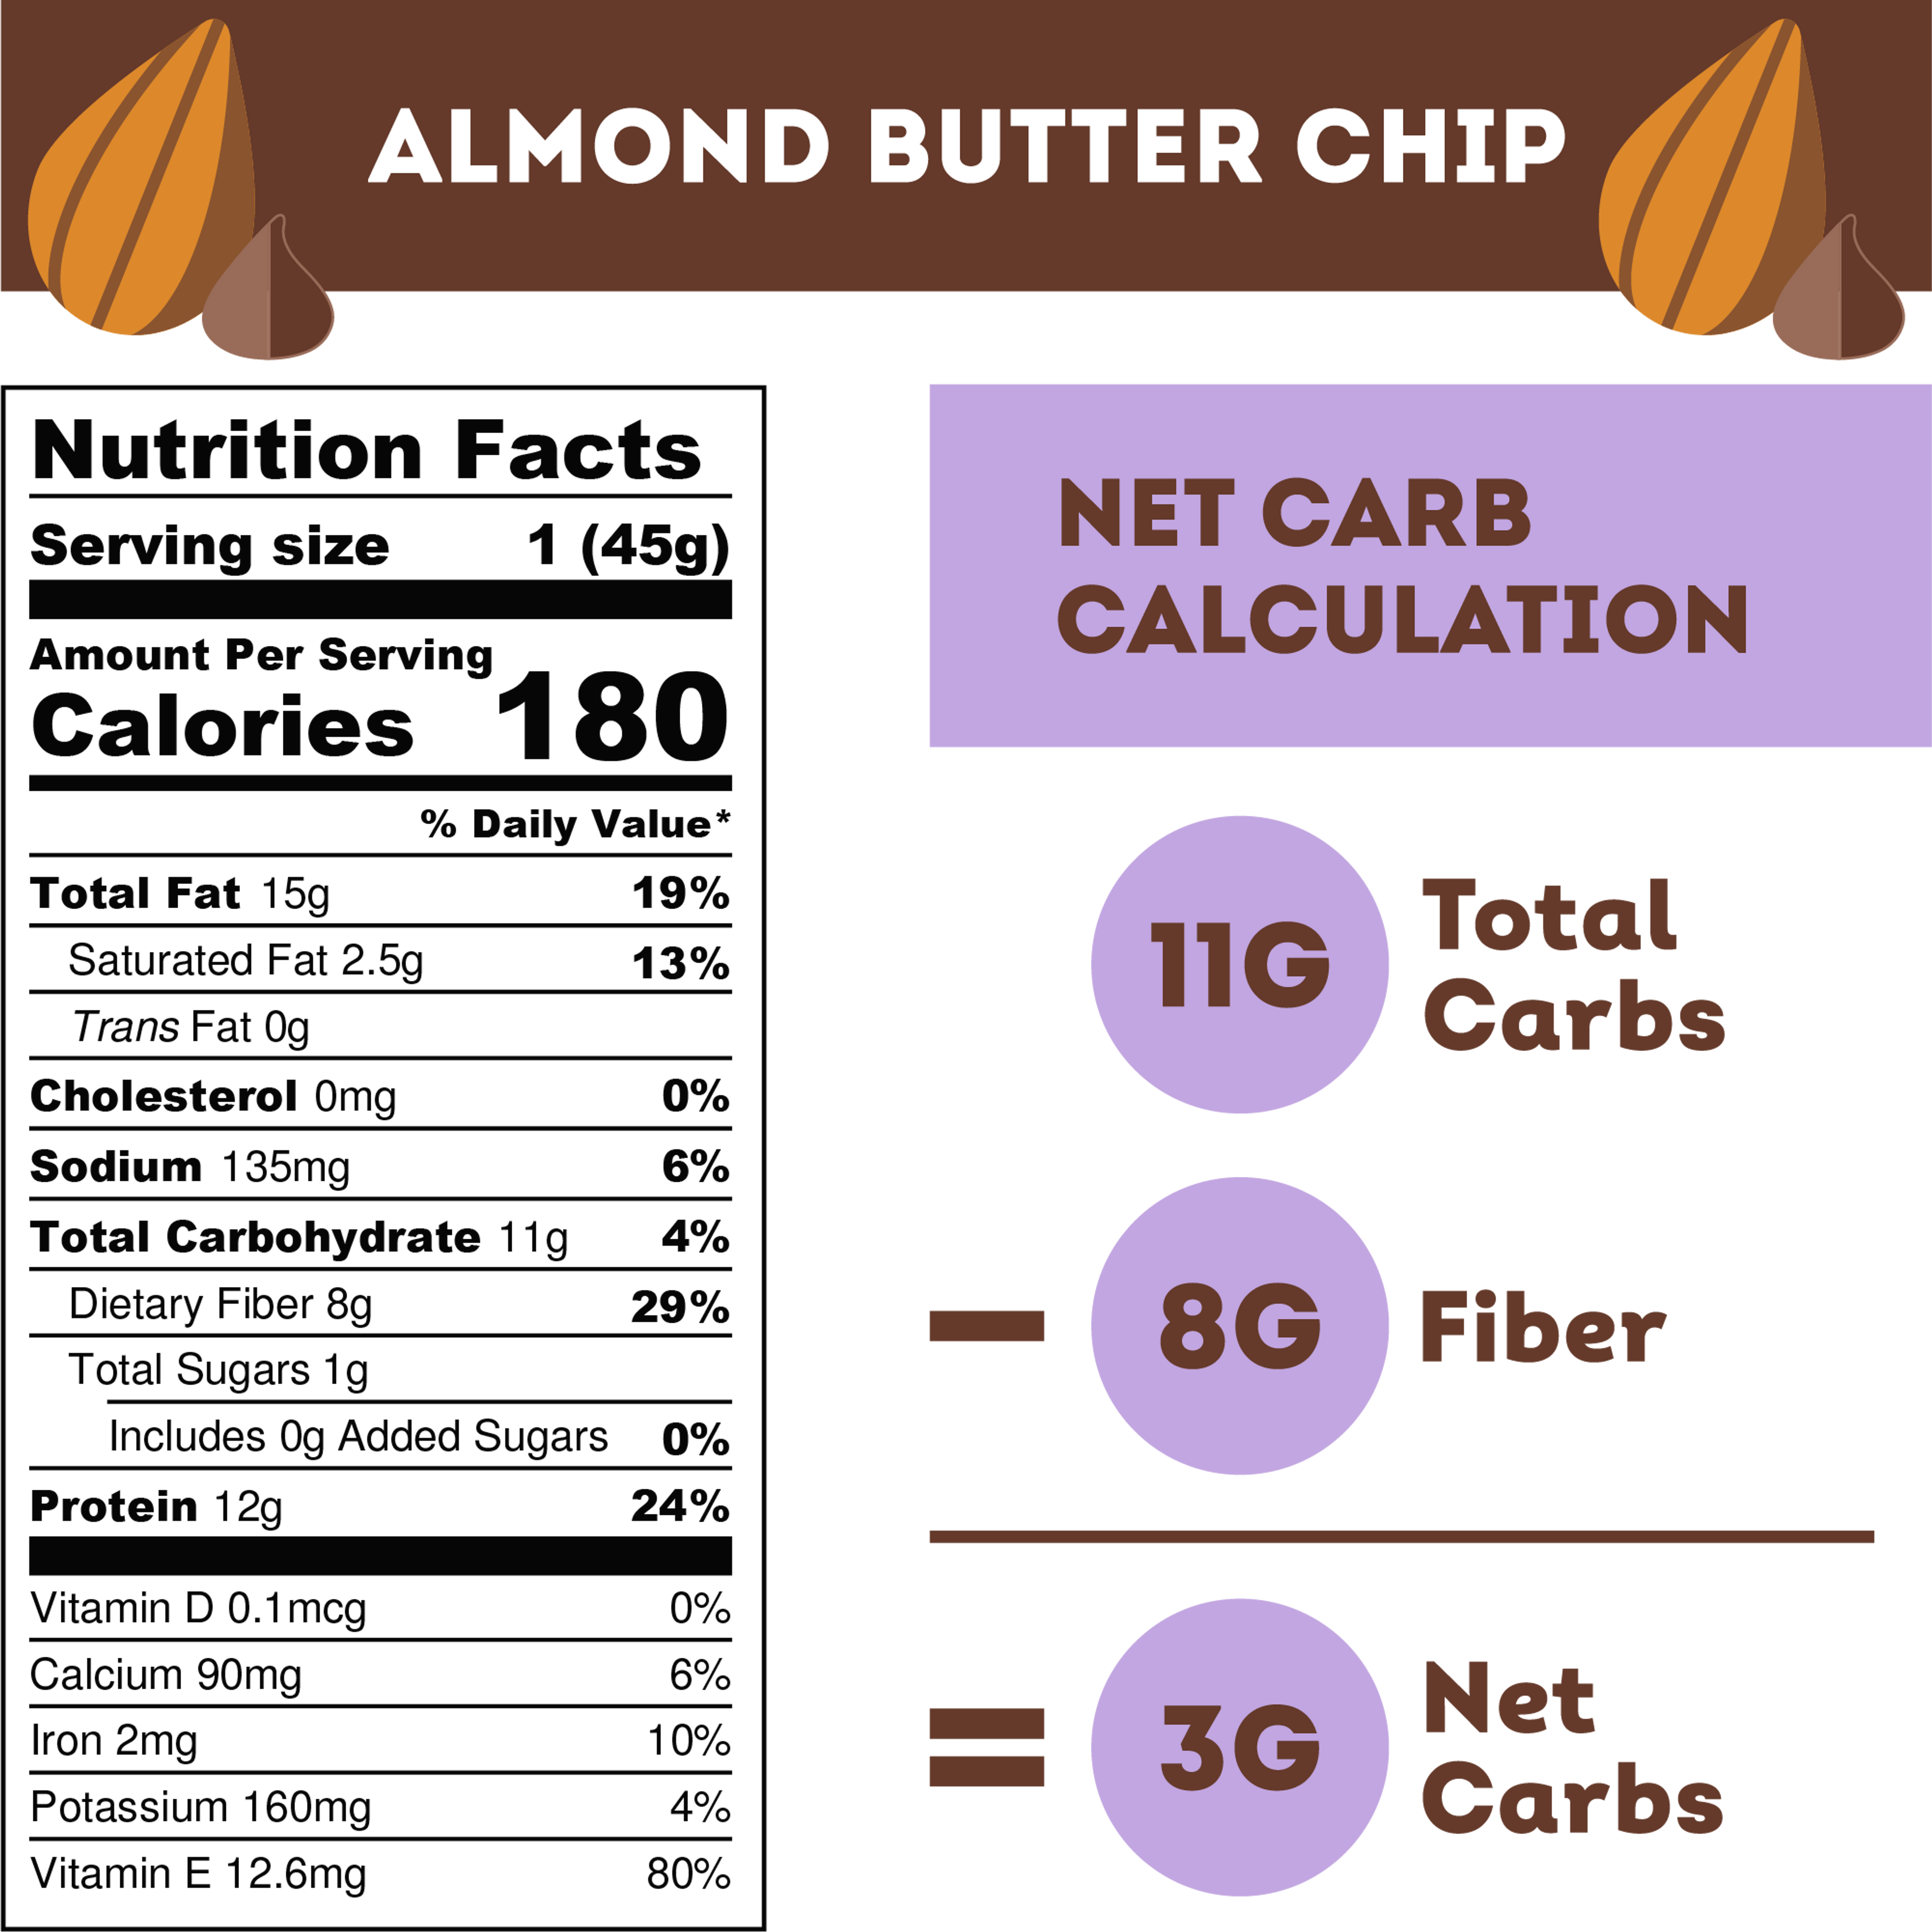 Almond Butter Chip (12 Bars)